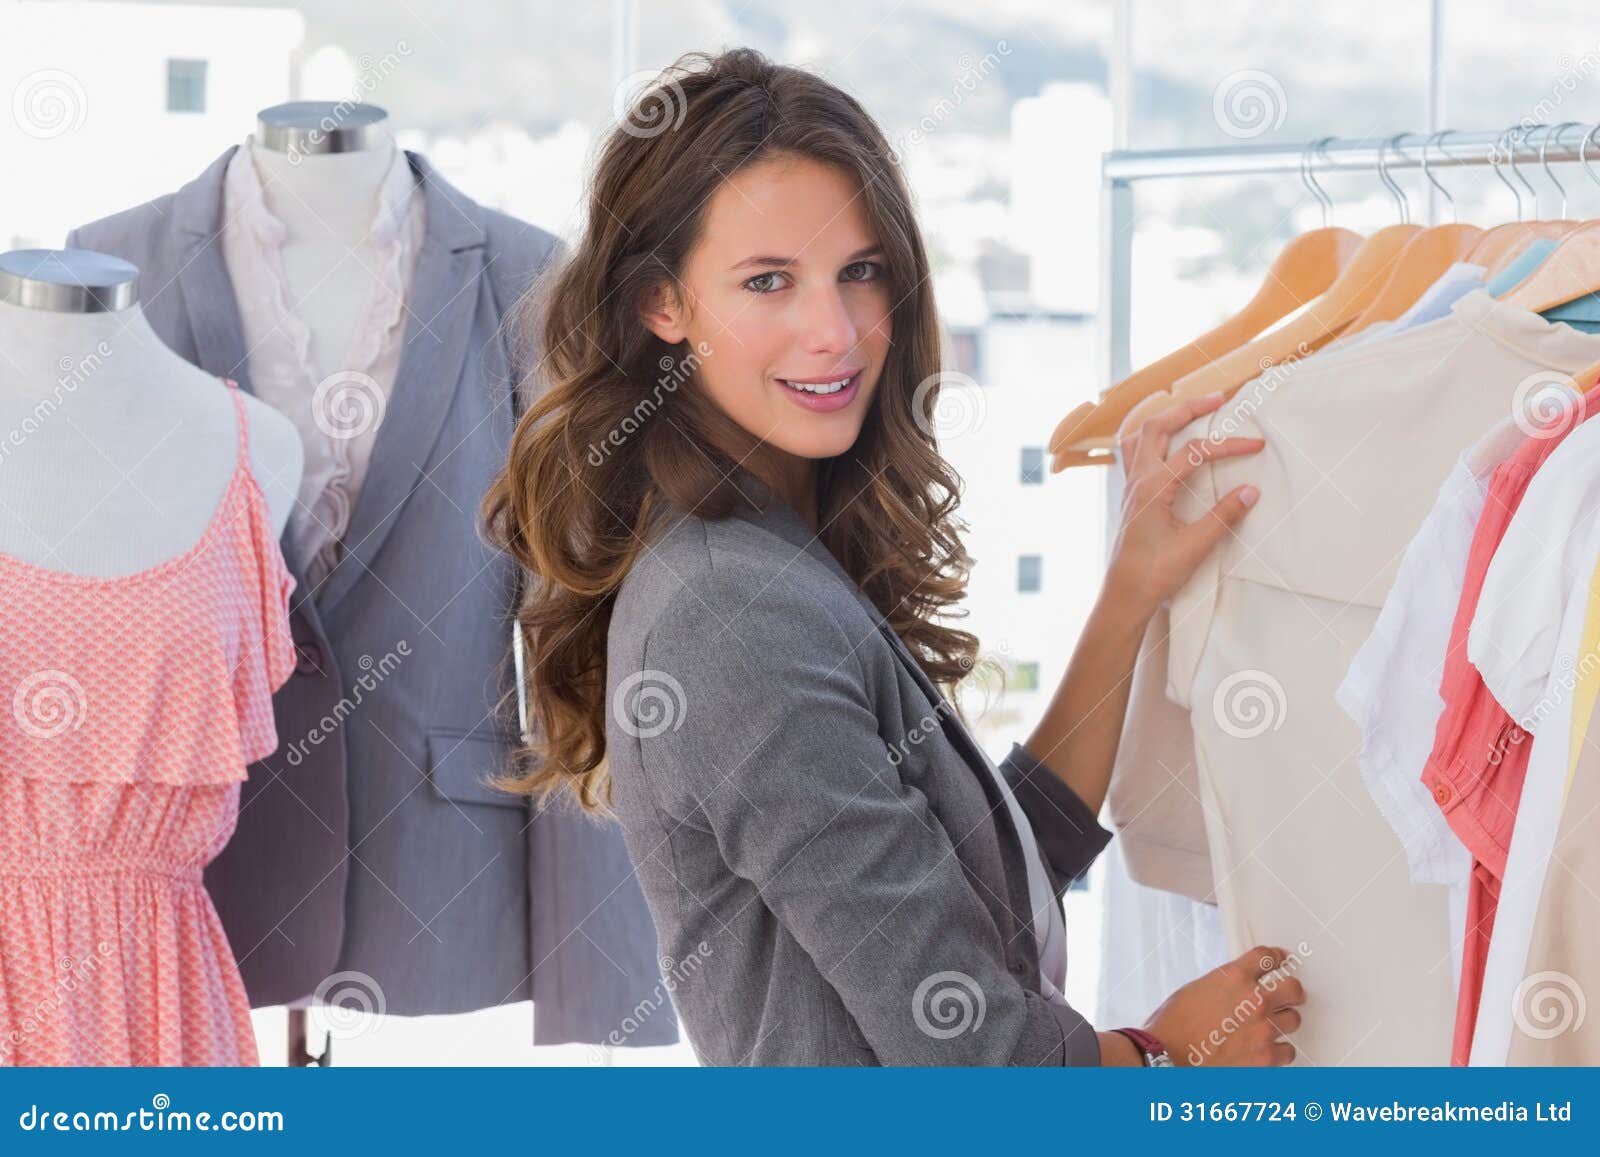 Fashion Woman Choosing Clothes Stock Photo - Image of fashionable ...